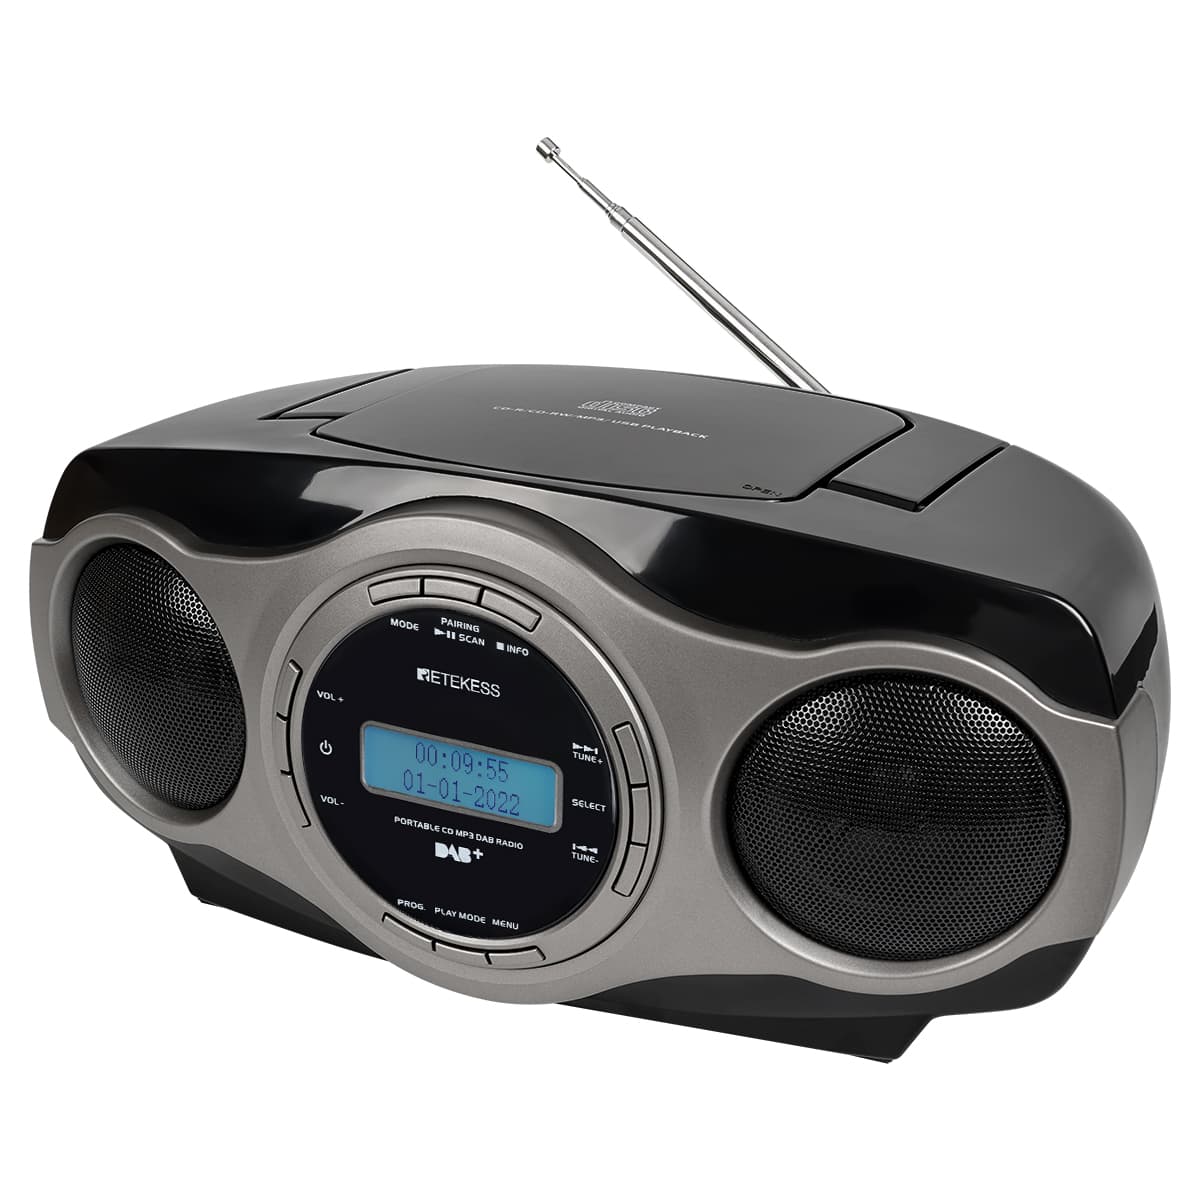 Rimpels toewijzen Actie Retekess TR631 Stereo FM Radio Portable CD player, Receive DAB Station,  Support USB, CD, AUX, European Version